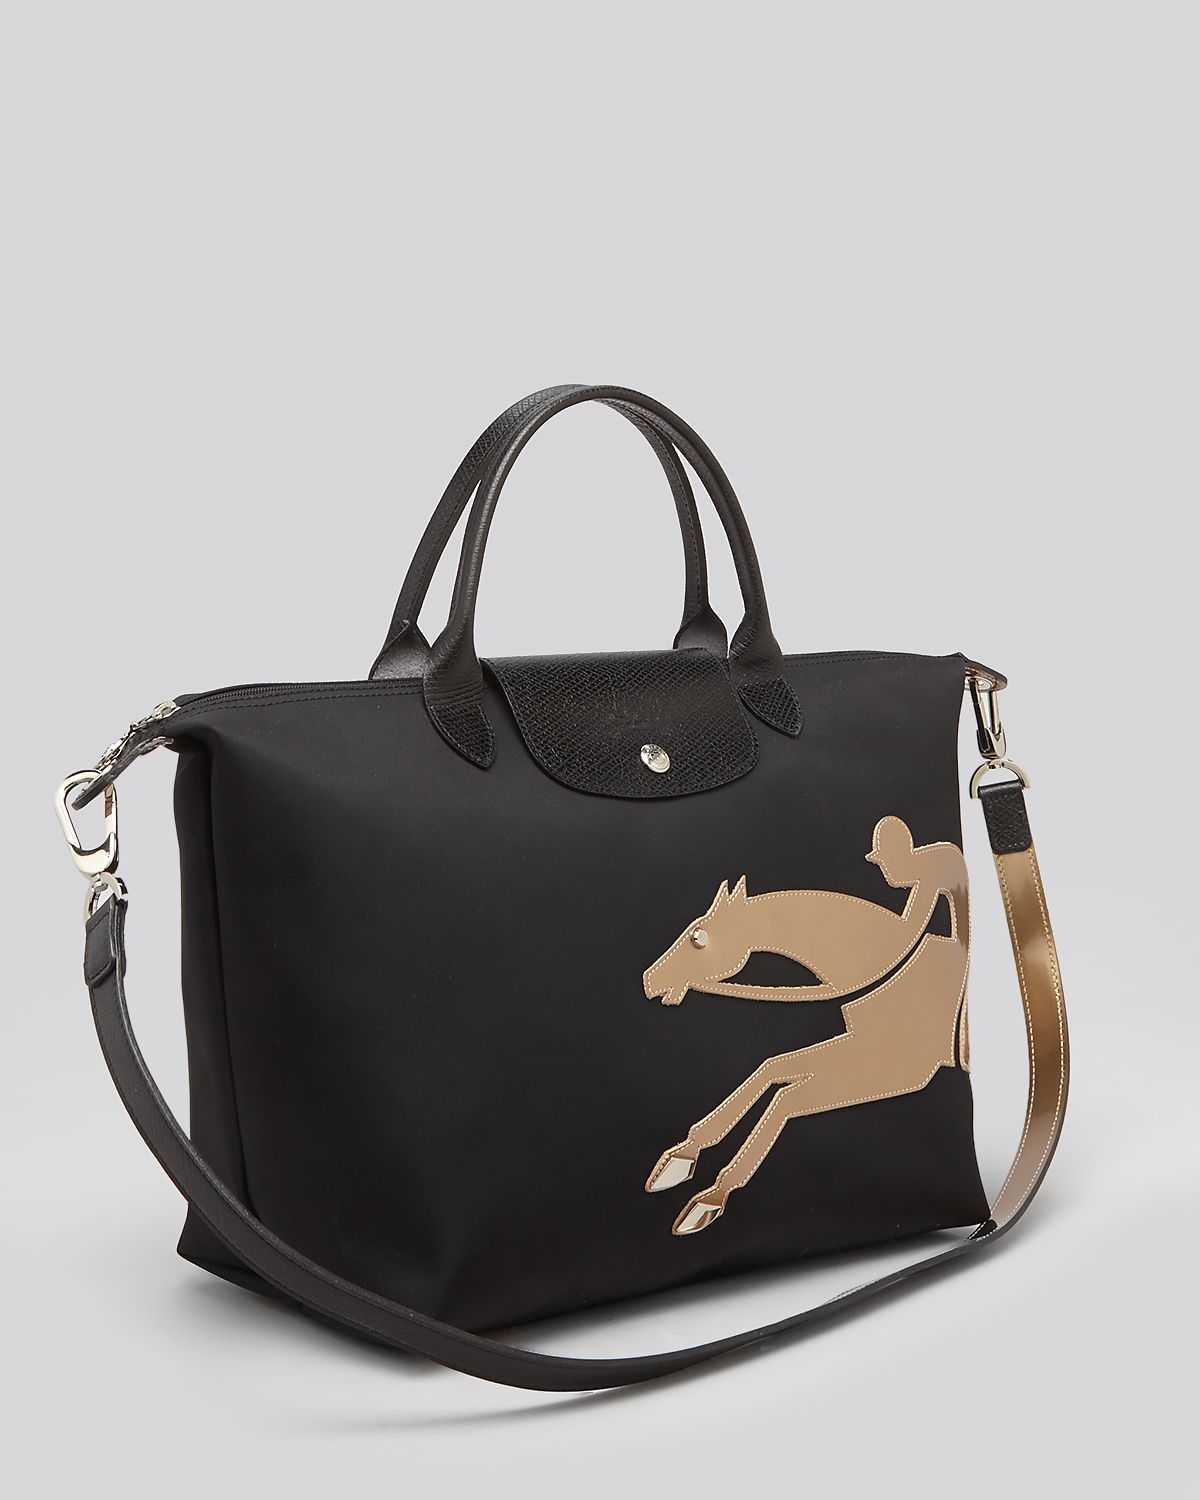 longchamp horse logo bag